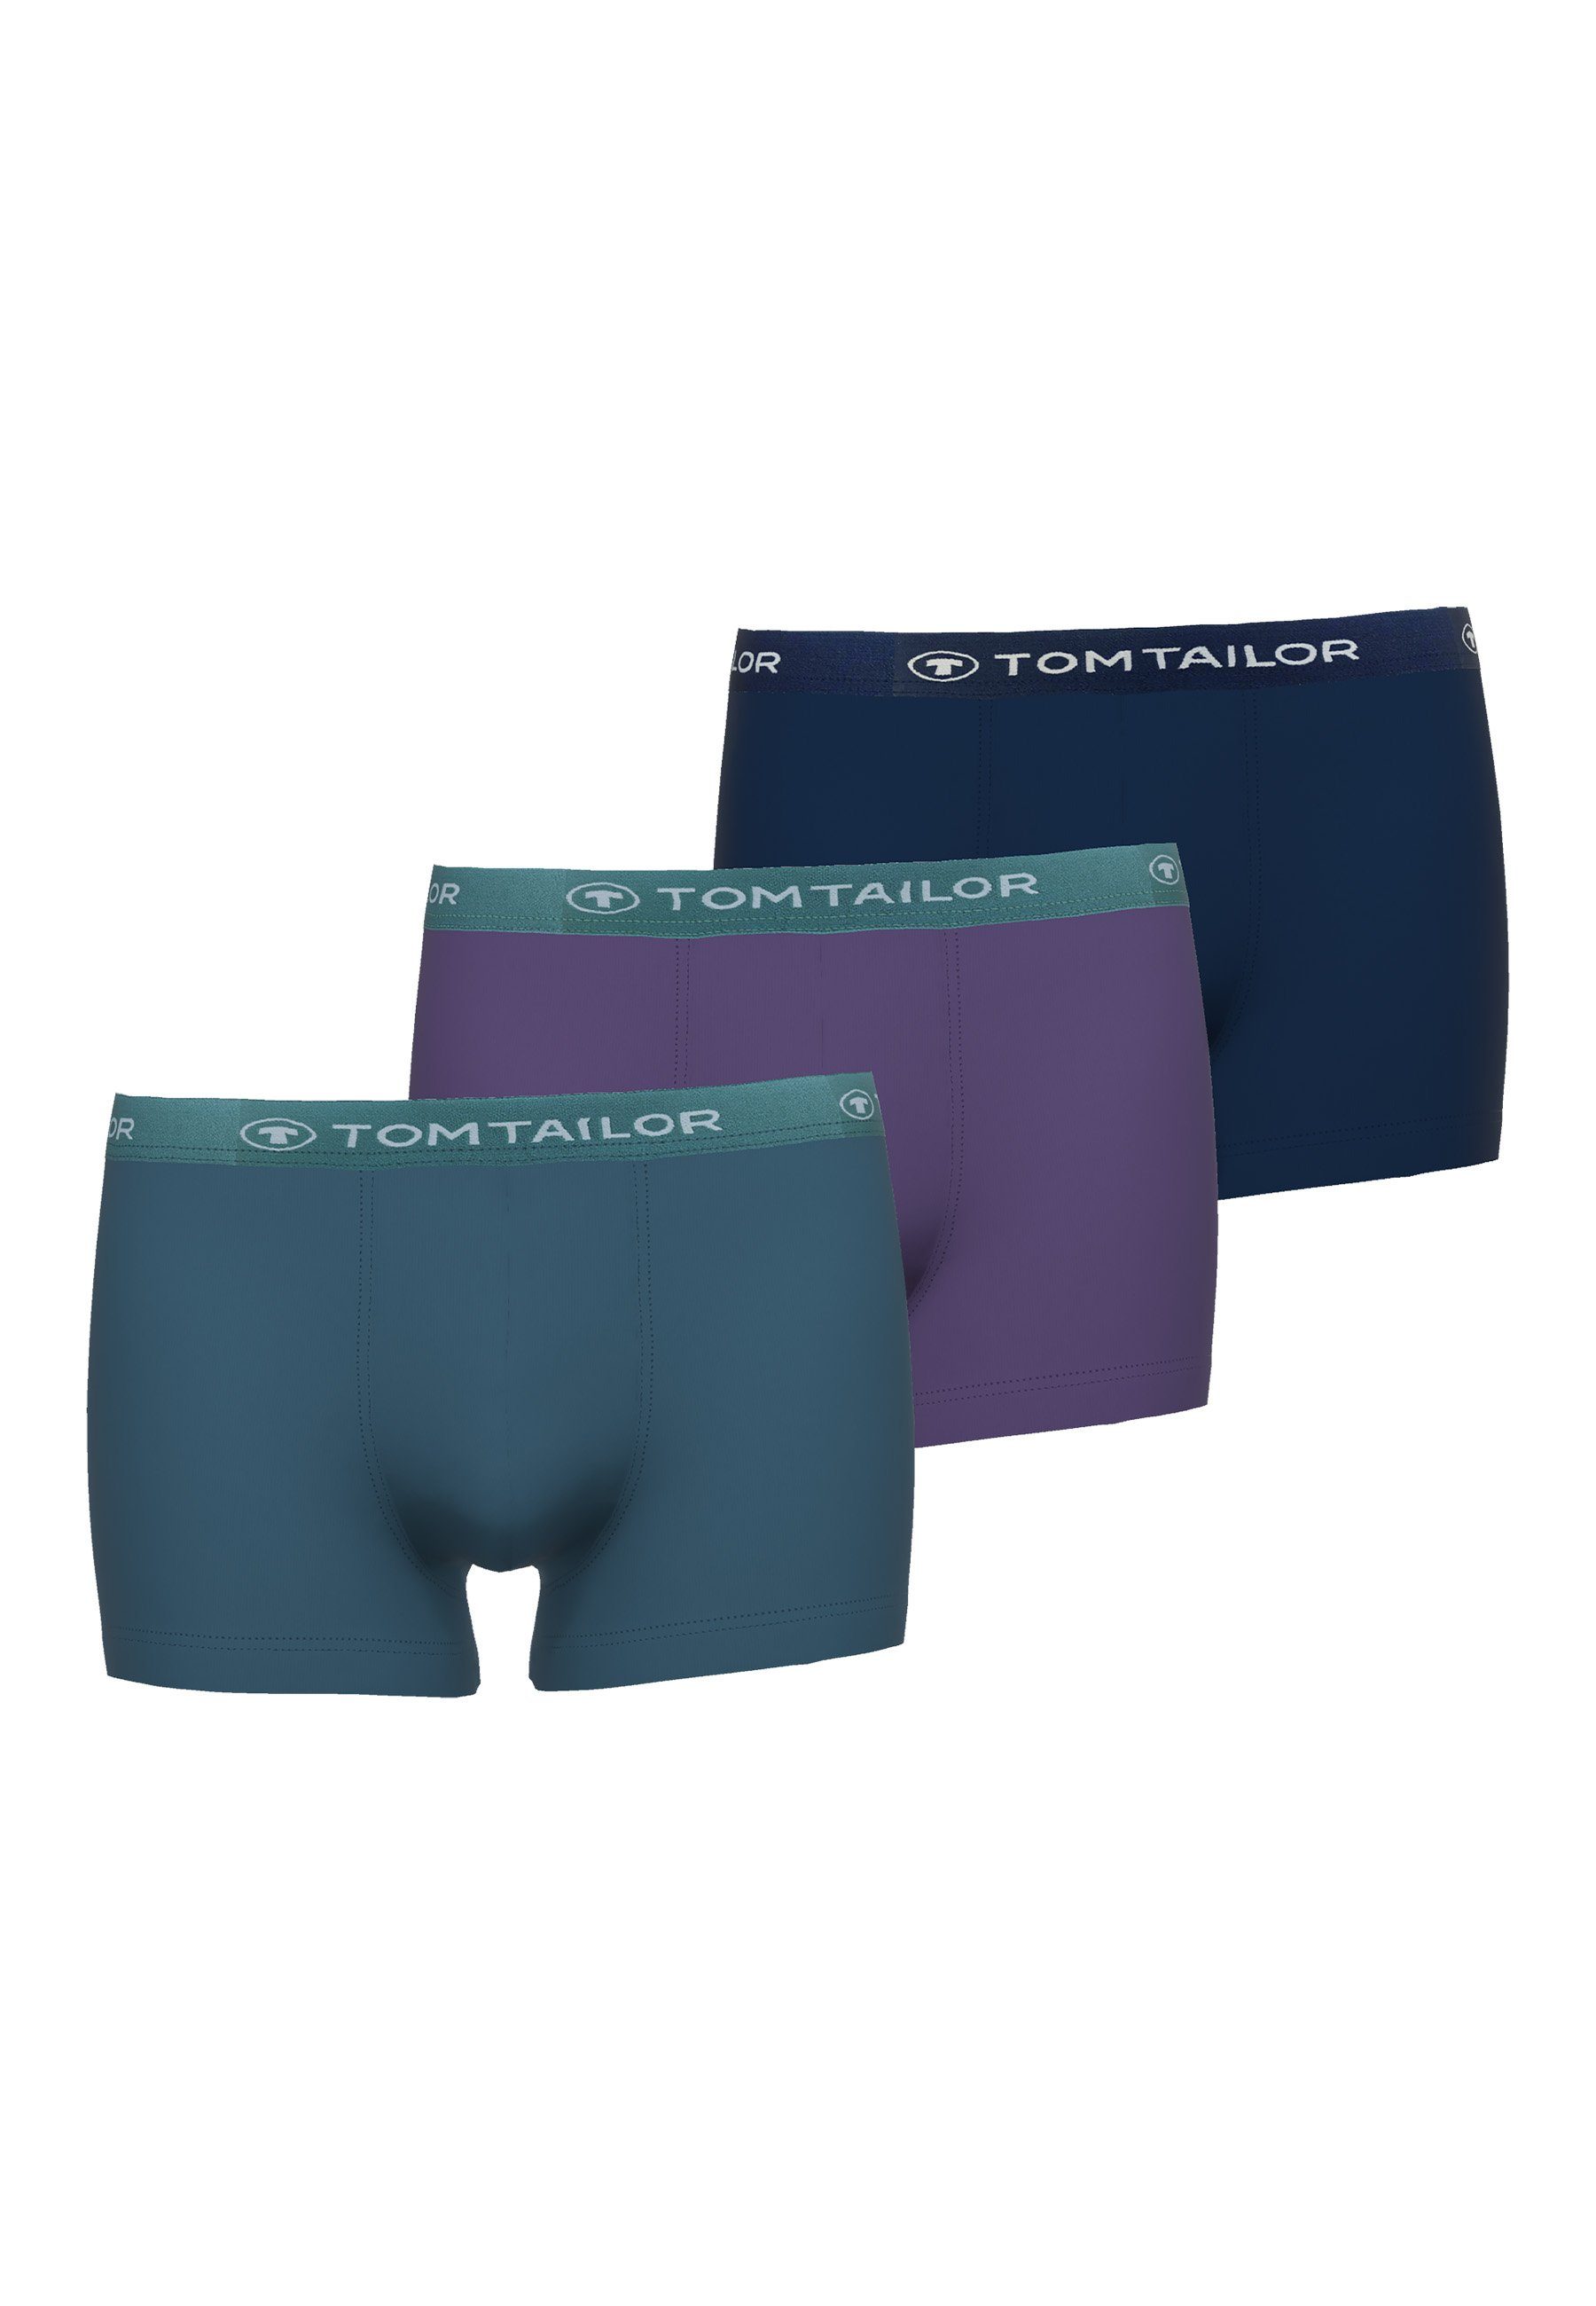 TOM TAILOR Boxershorts TOM TAILOR Herren Pants lila uni 3er Pack (3-St) lila-dunkel-multicolor1